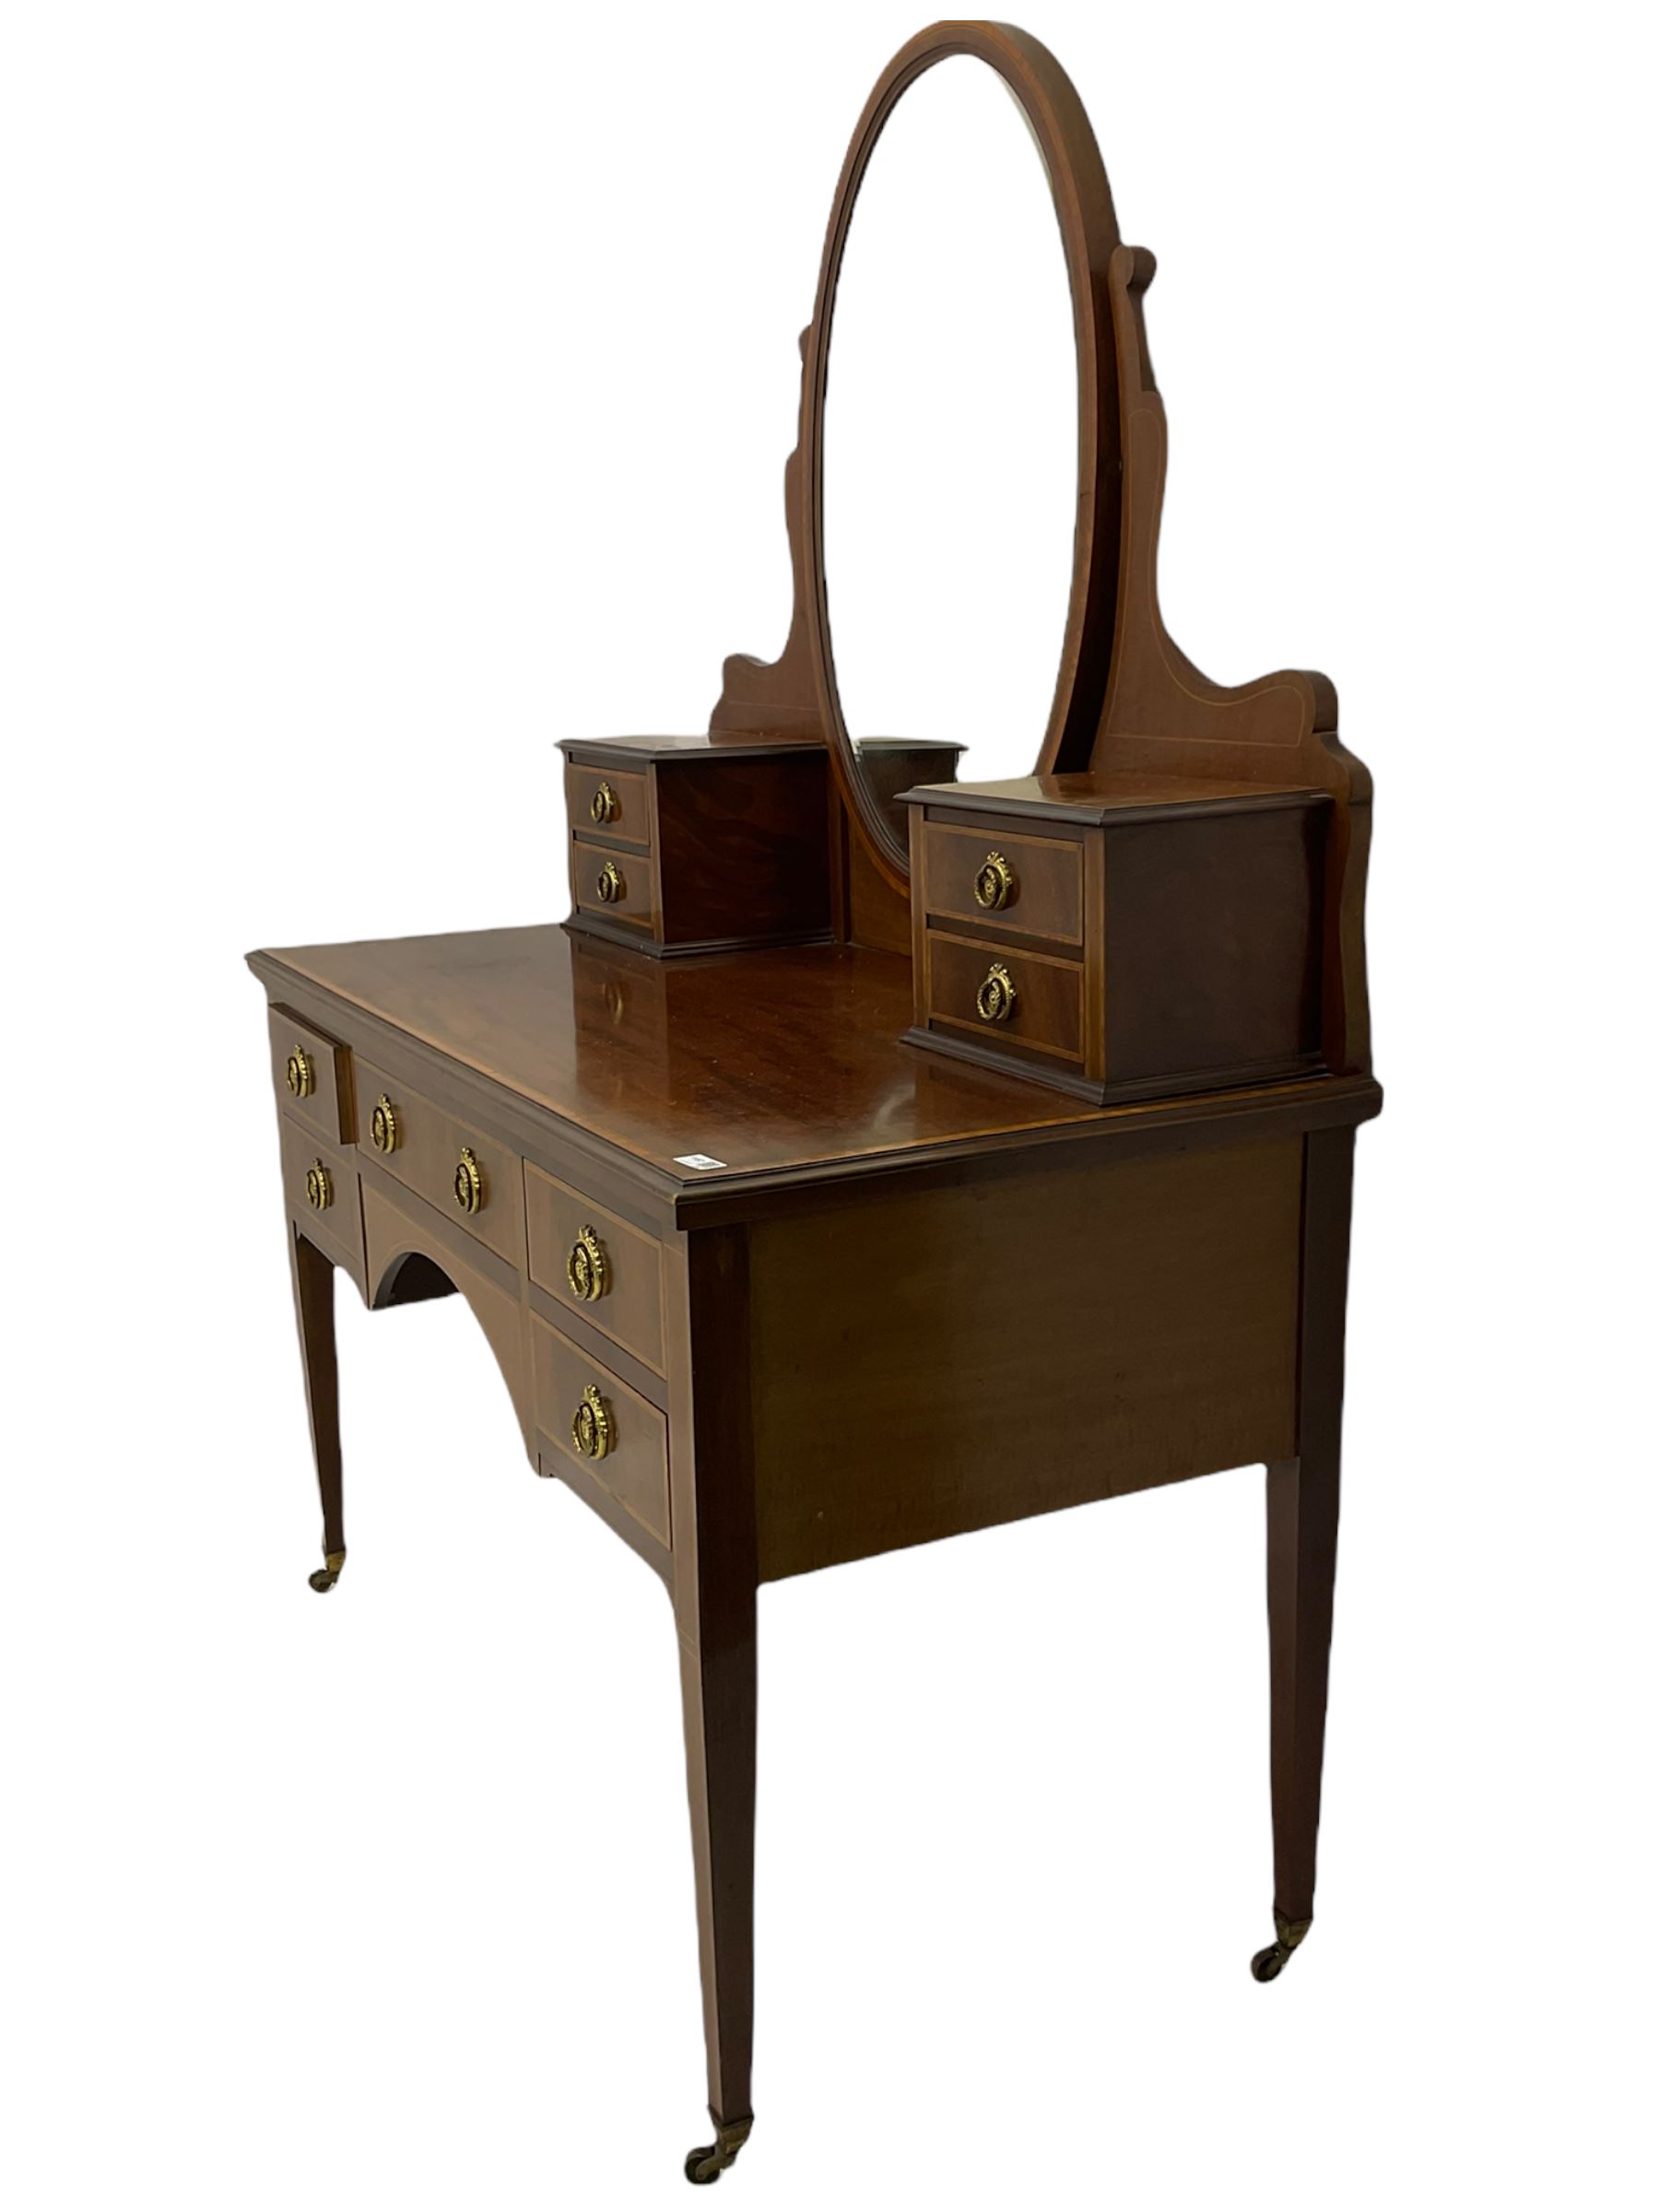 James Shoolbred & Co. London - Edwardian inlaid mahogany dressing table - Image 3 of 6